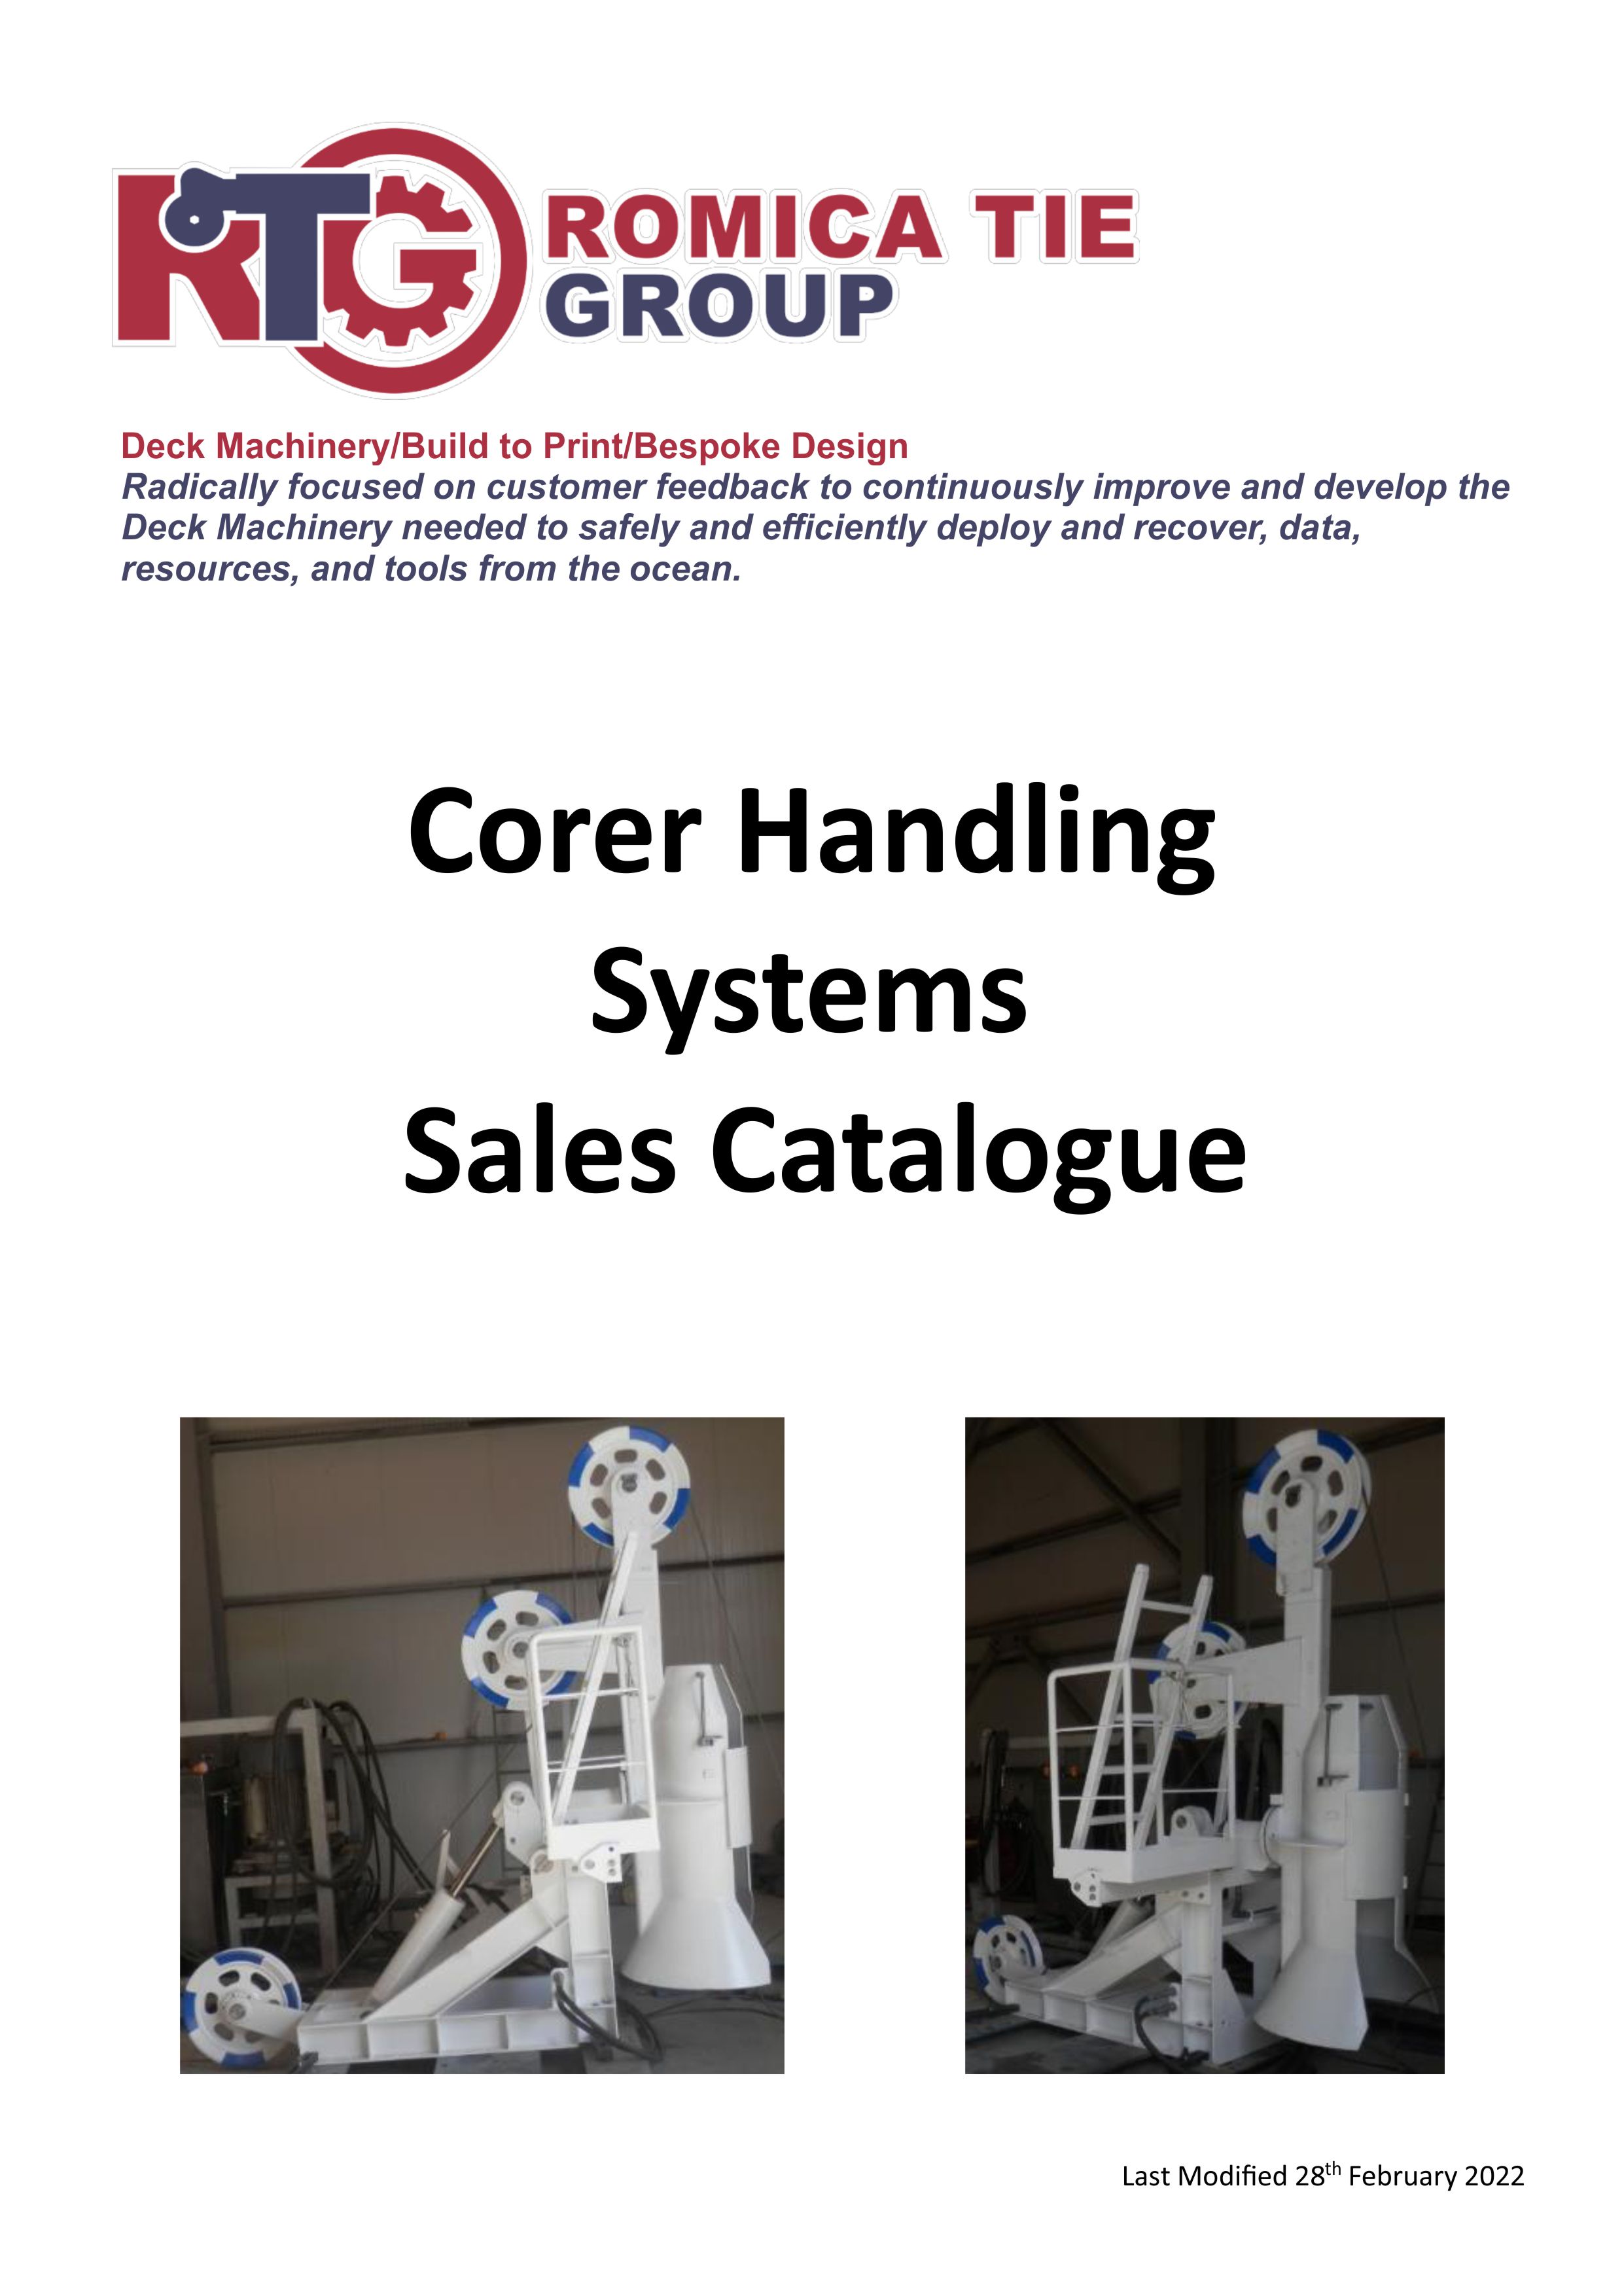 Corer Handling Systems